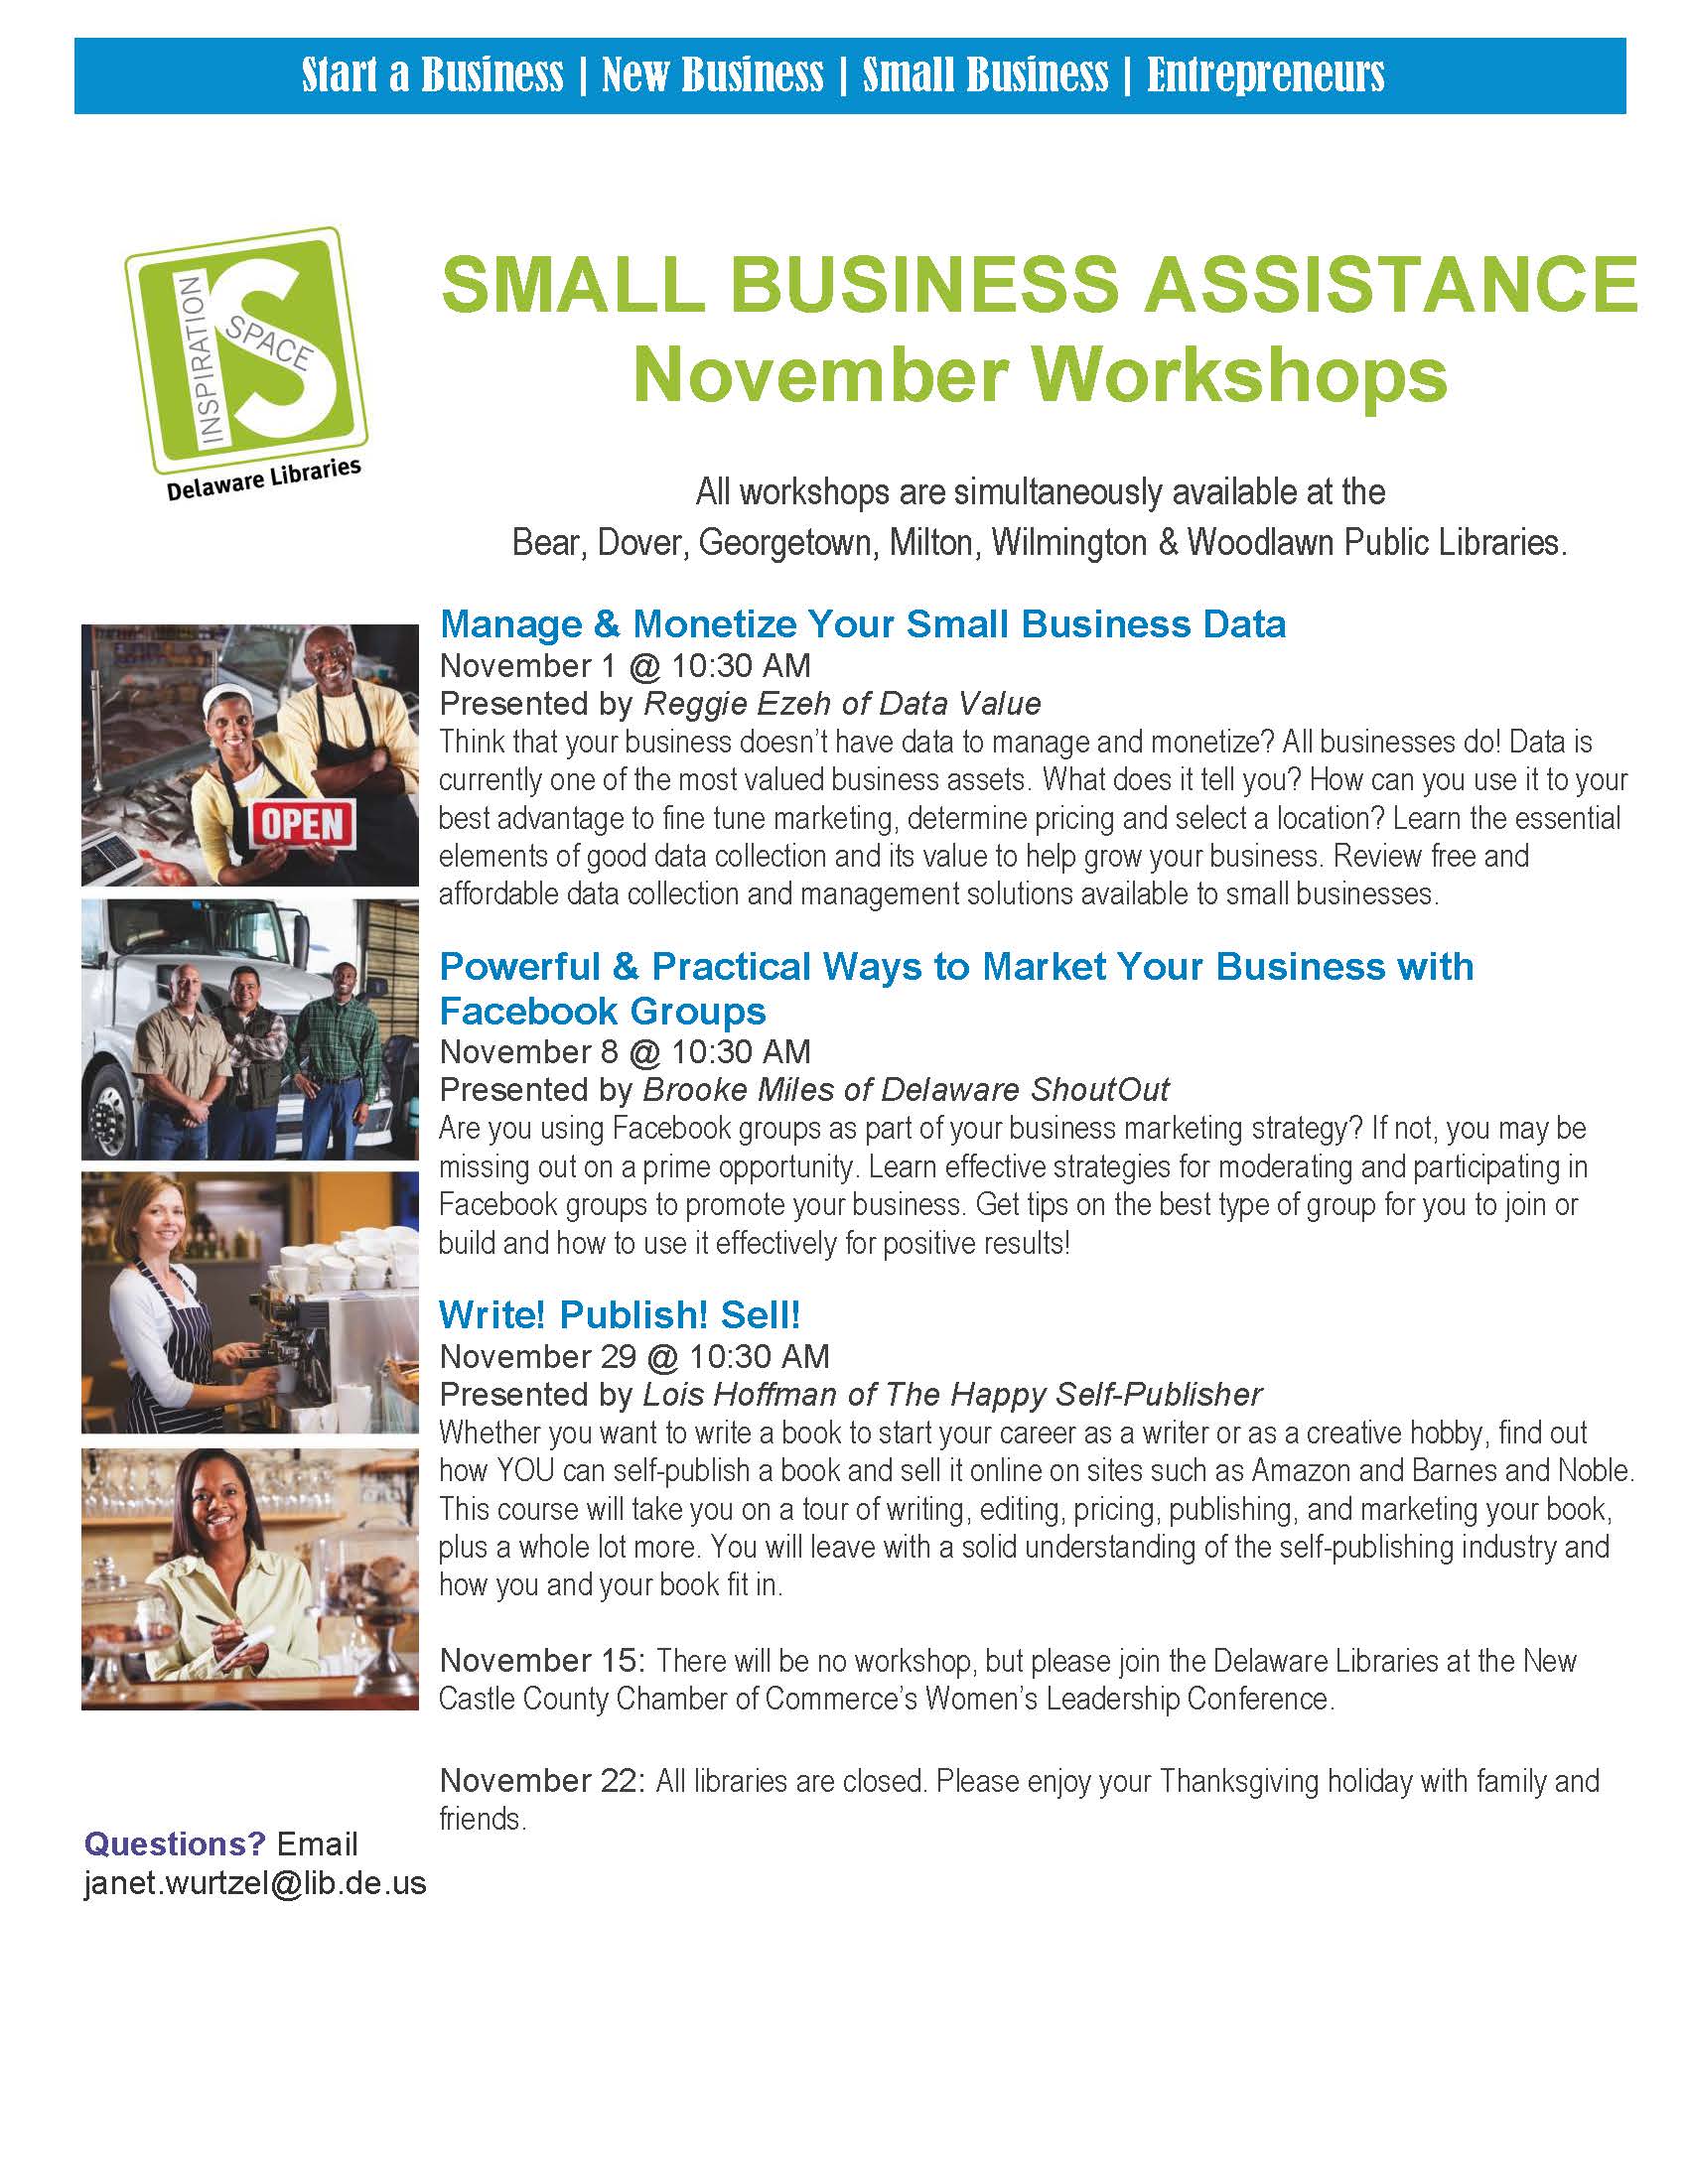 Small Business Assistance November Workshops